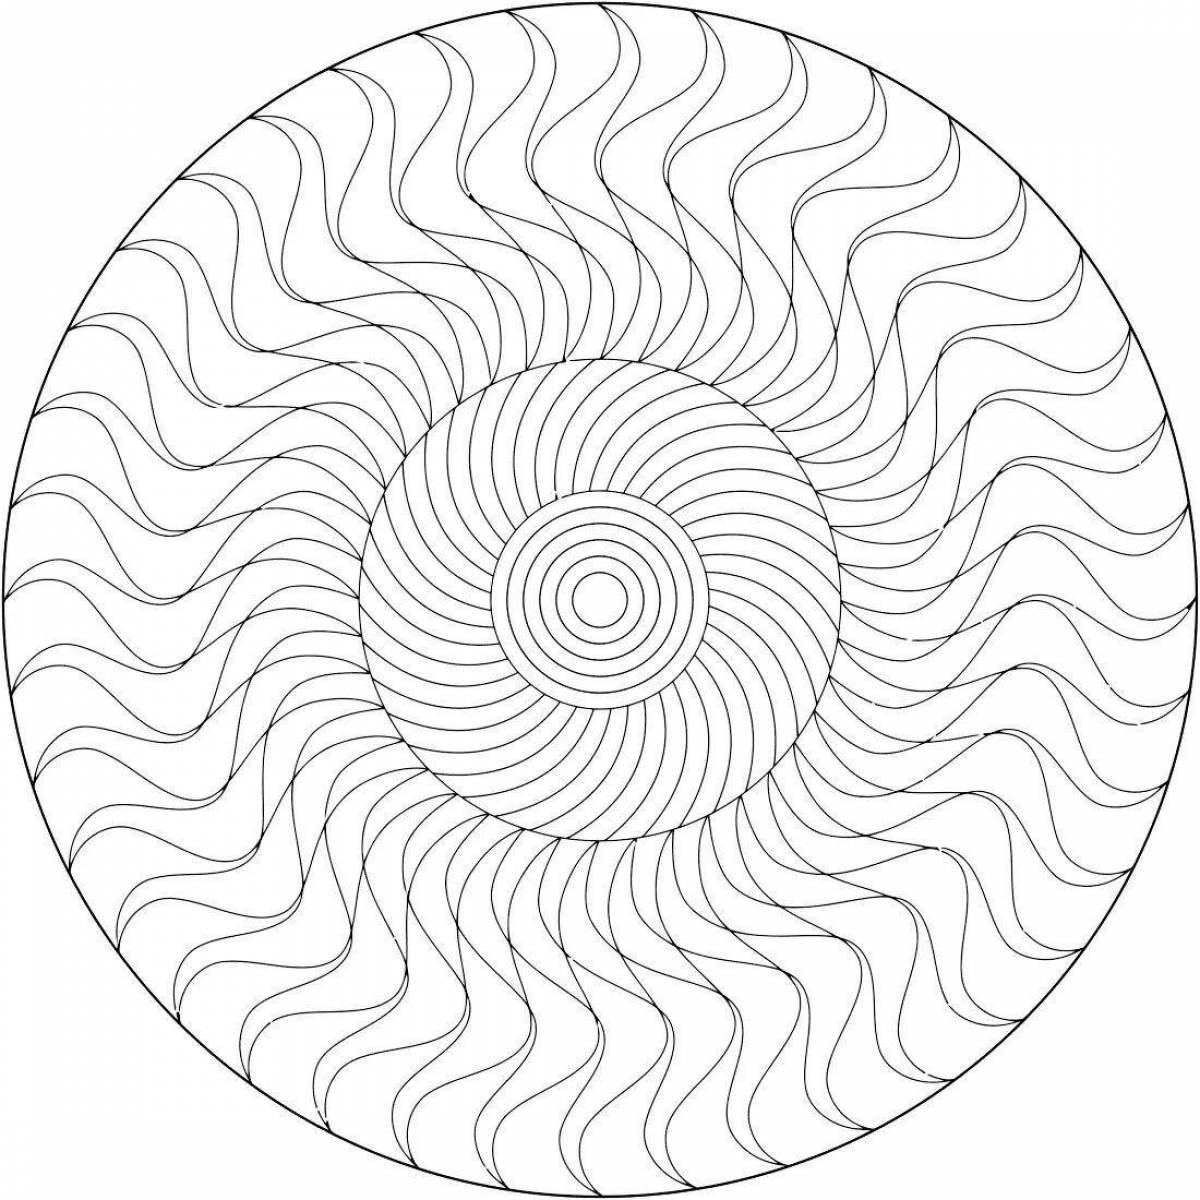 Coloring bright circular spiral